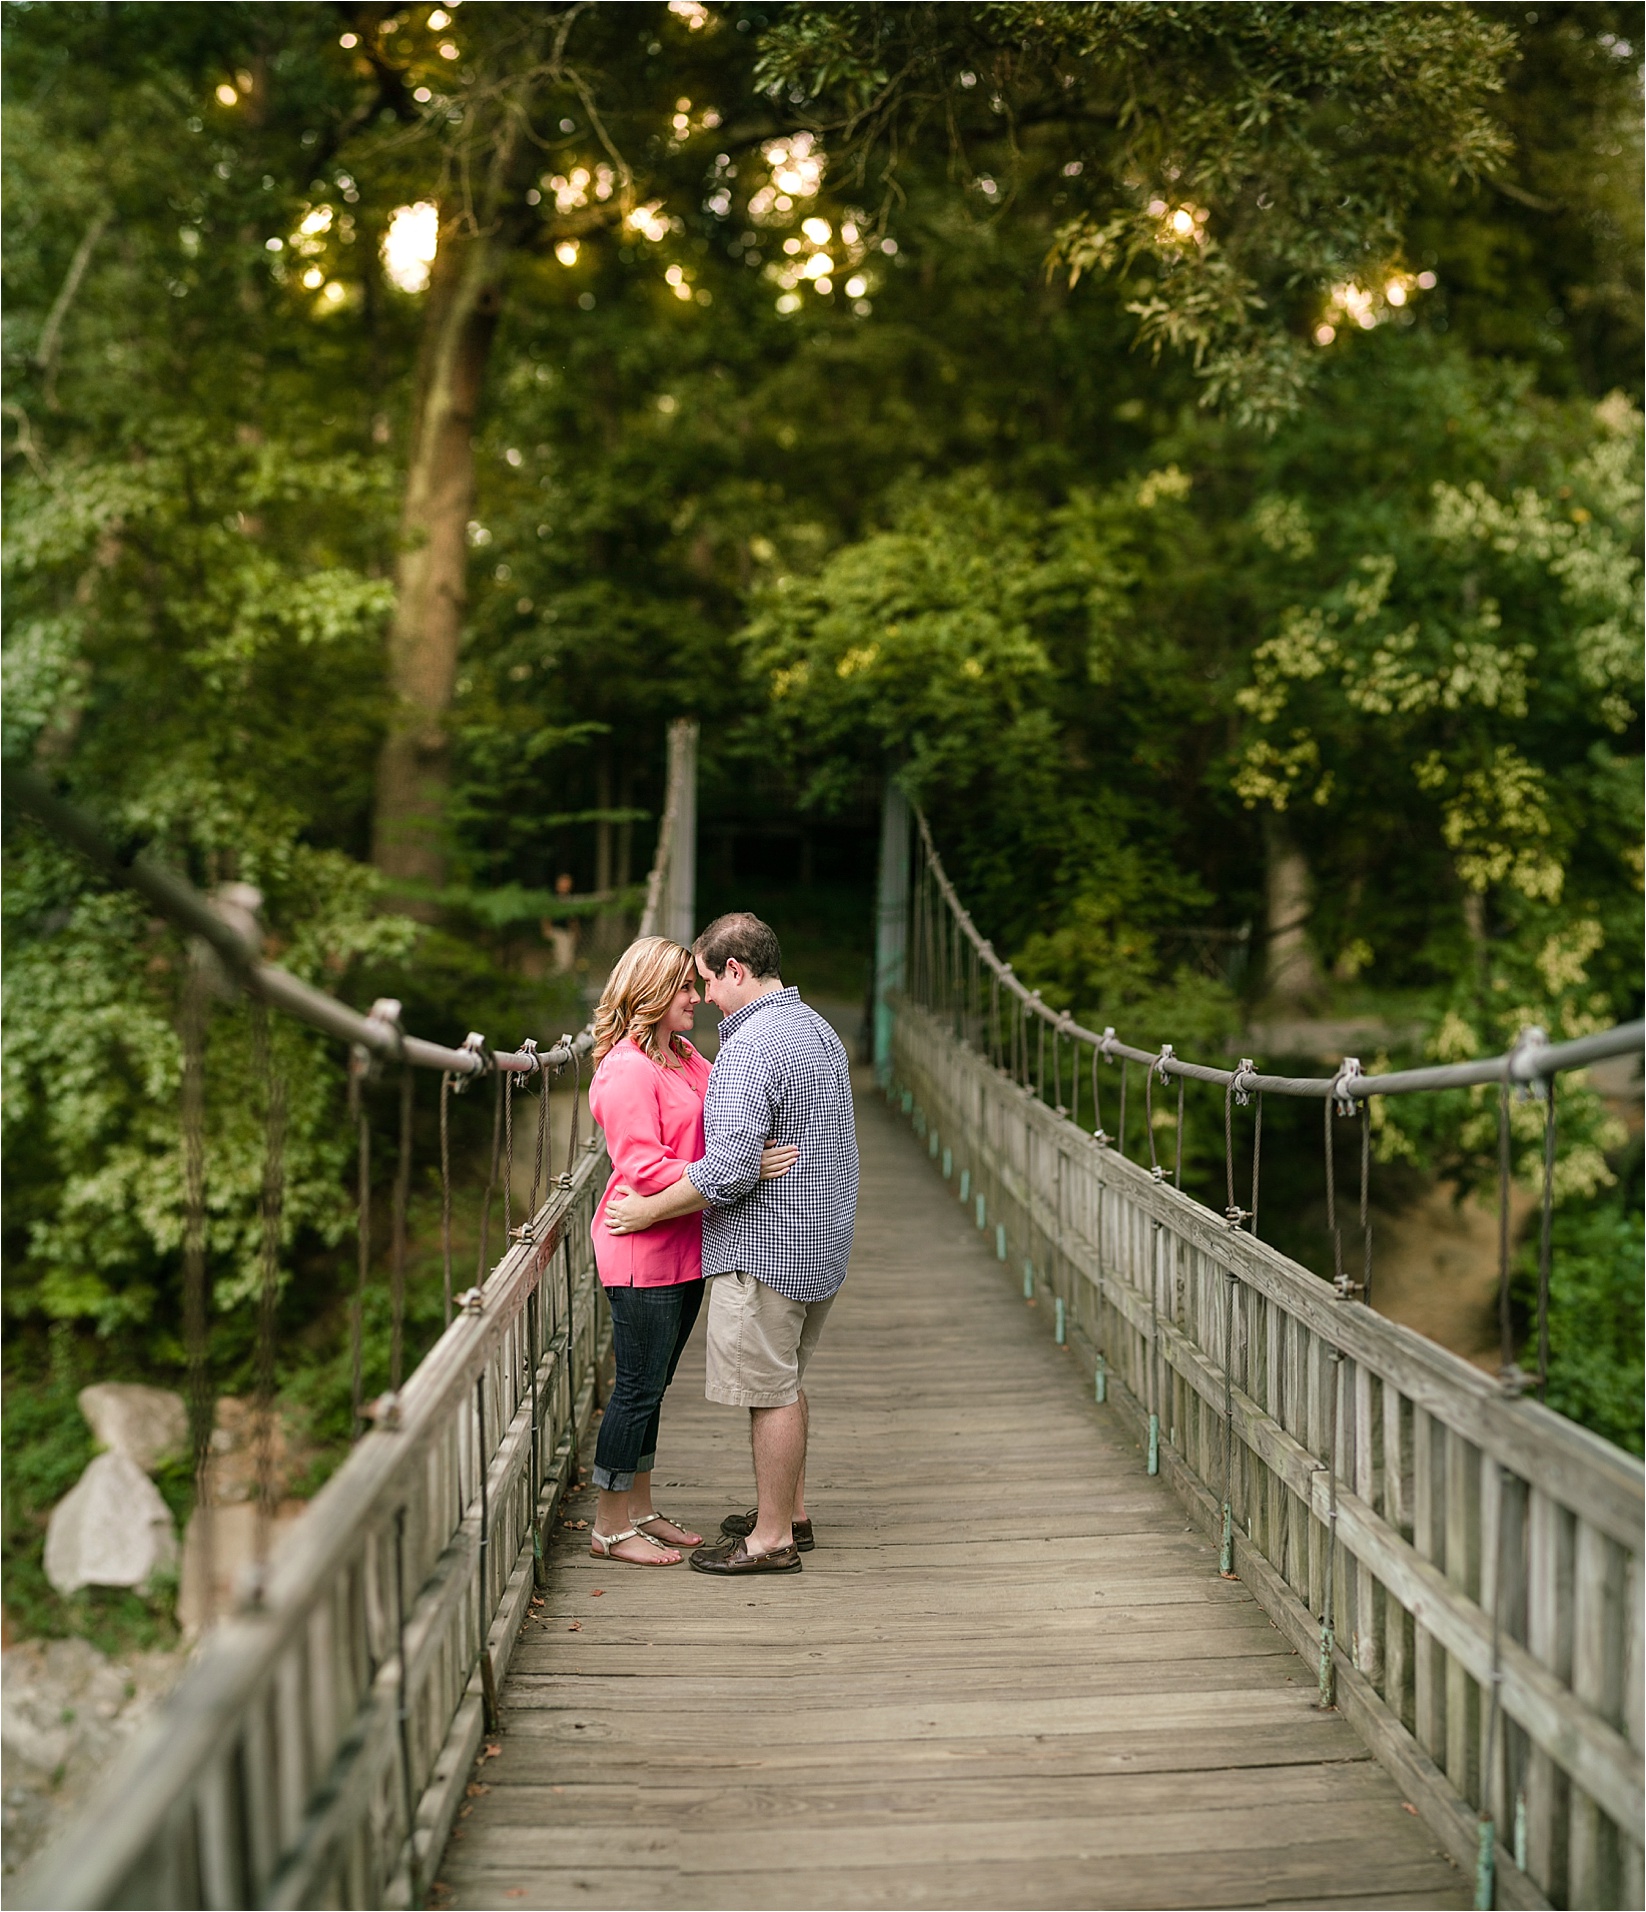 Brenizer method on the bridge at Catherine & Jordan's engagement session at freedom park and marshall park in Charlotte North Carolina